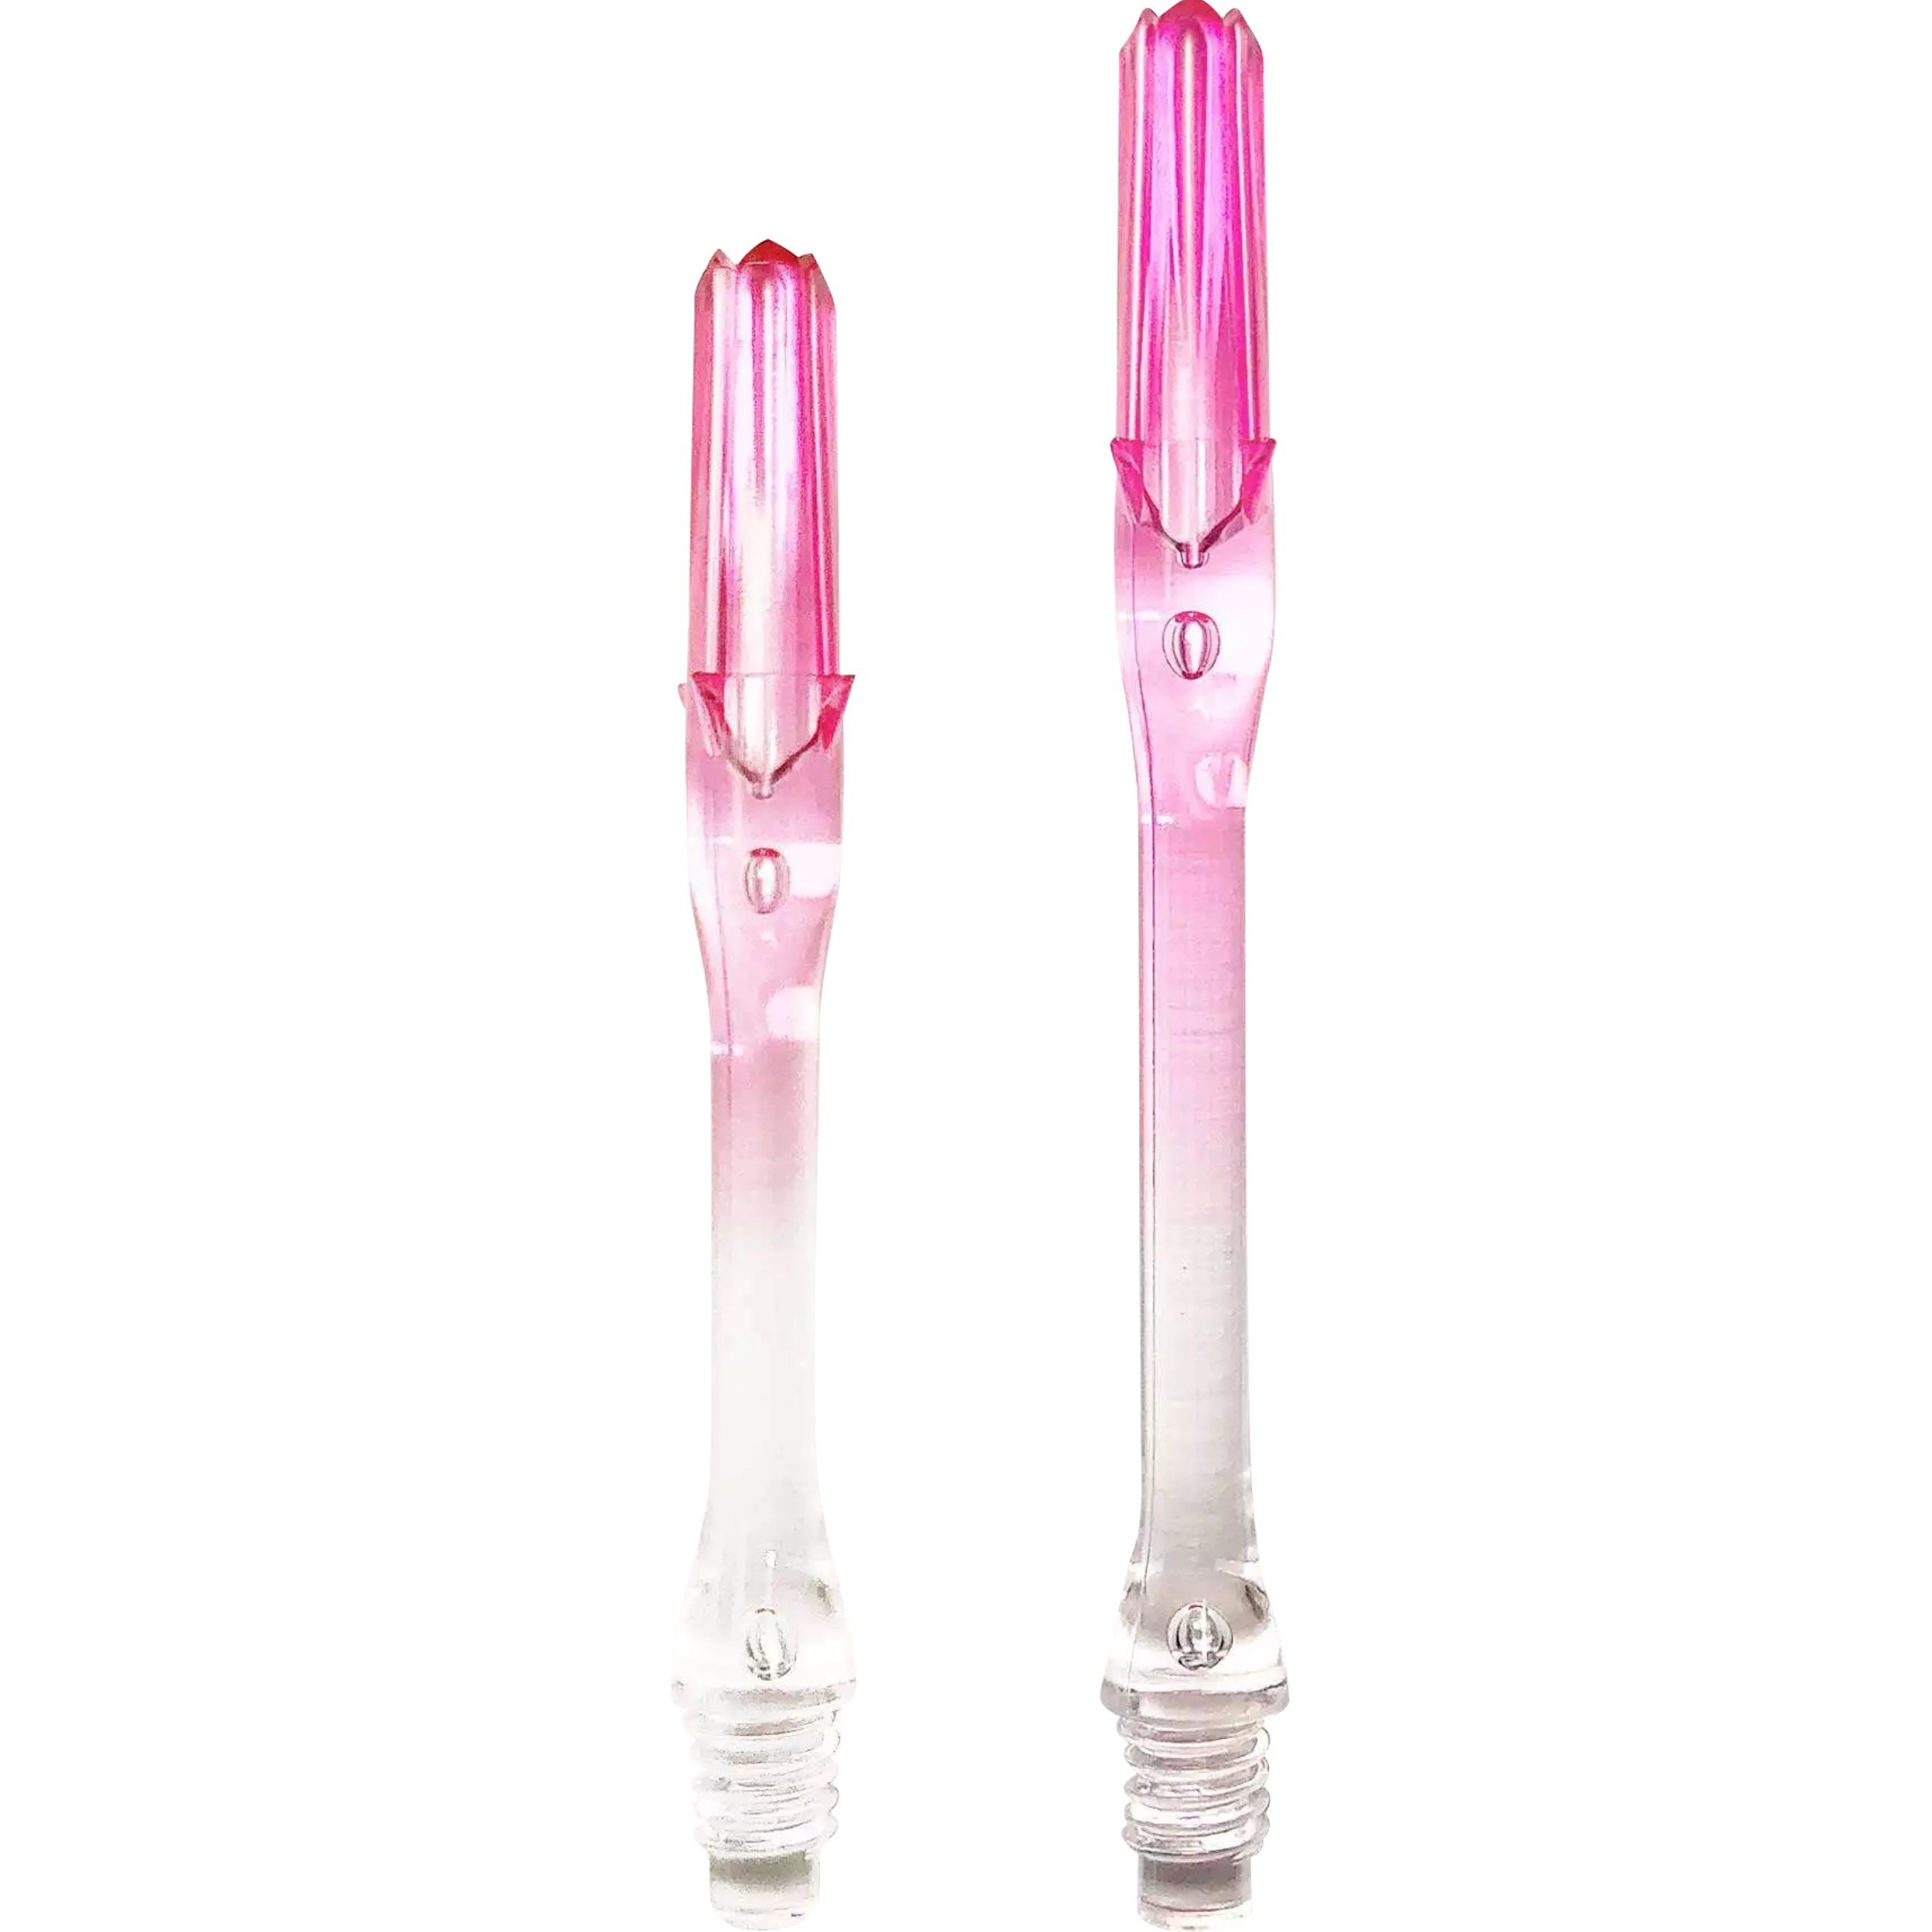 L-Style - L-Shaft Lock Slim N9 TwinColor - Transparent Pink